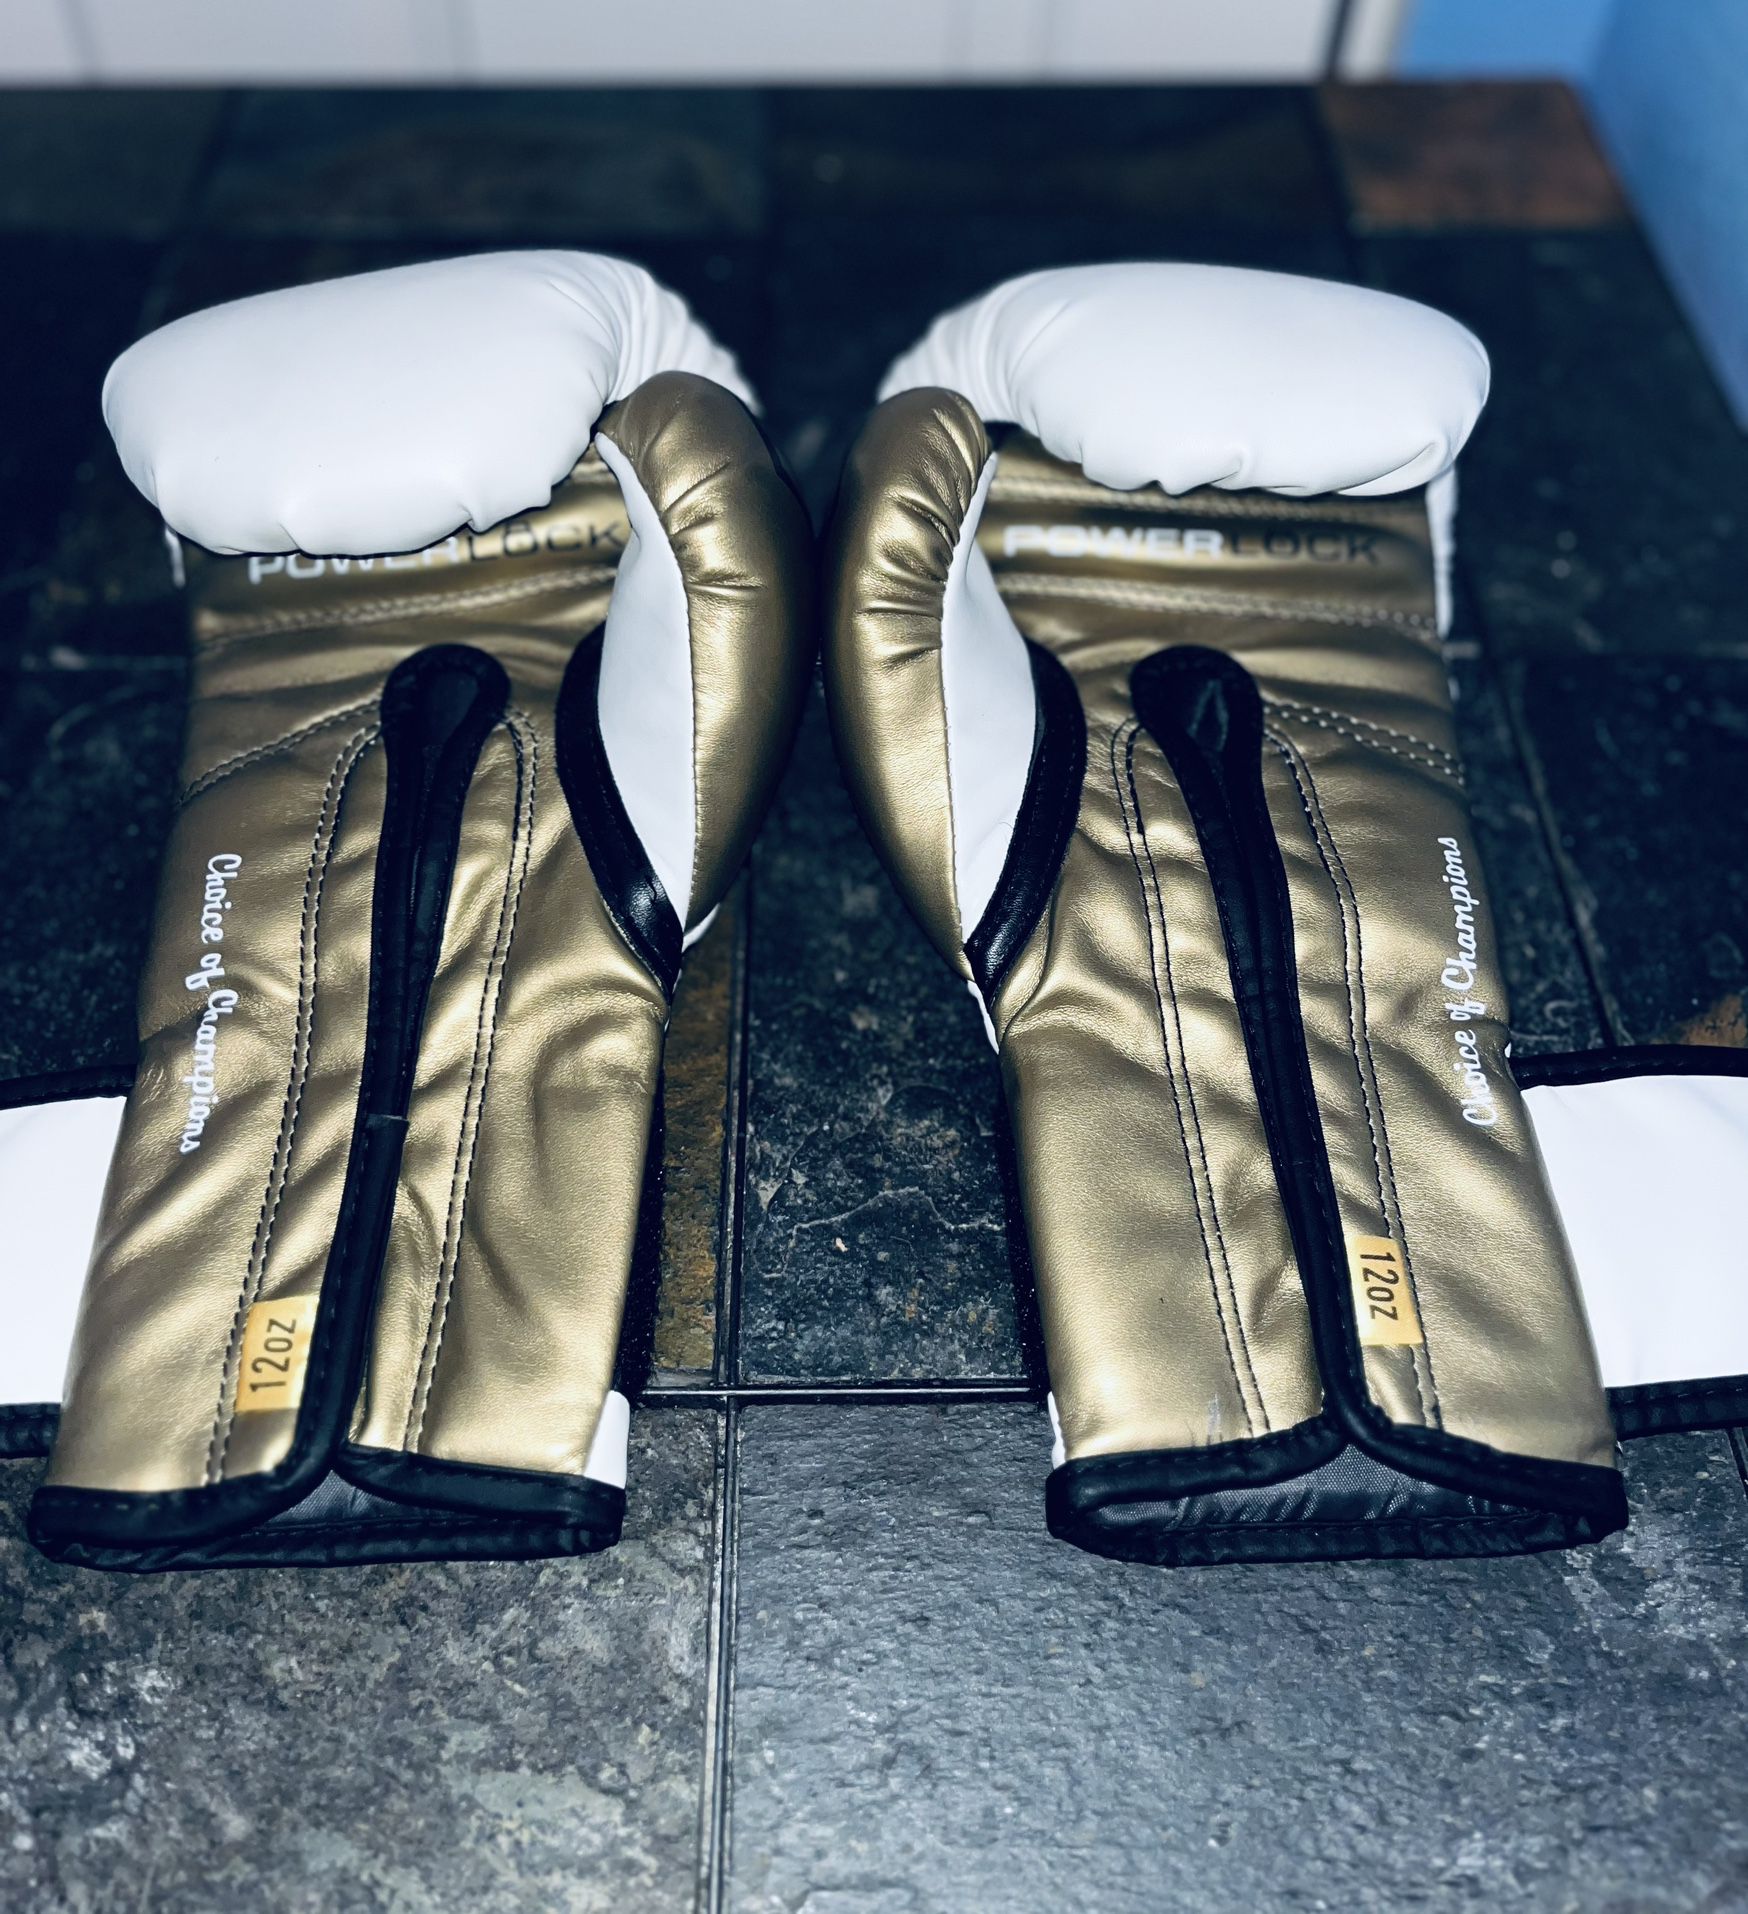 12 OZ Boxing Gloves 